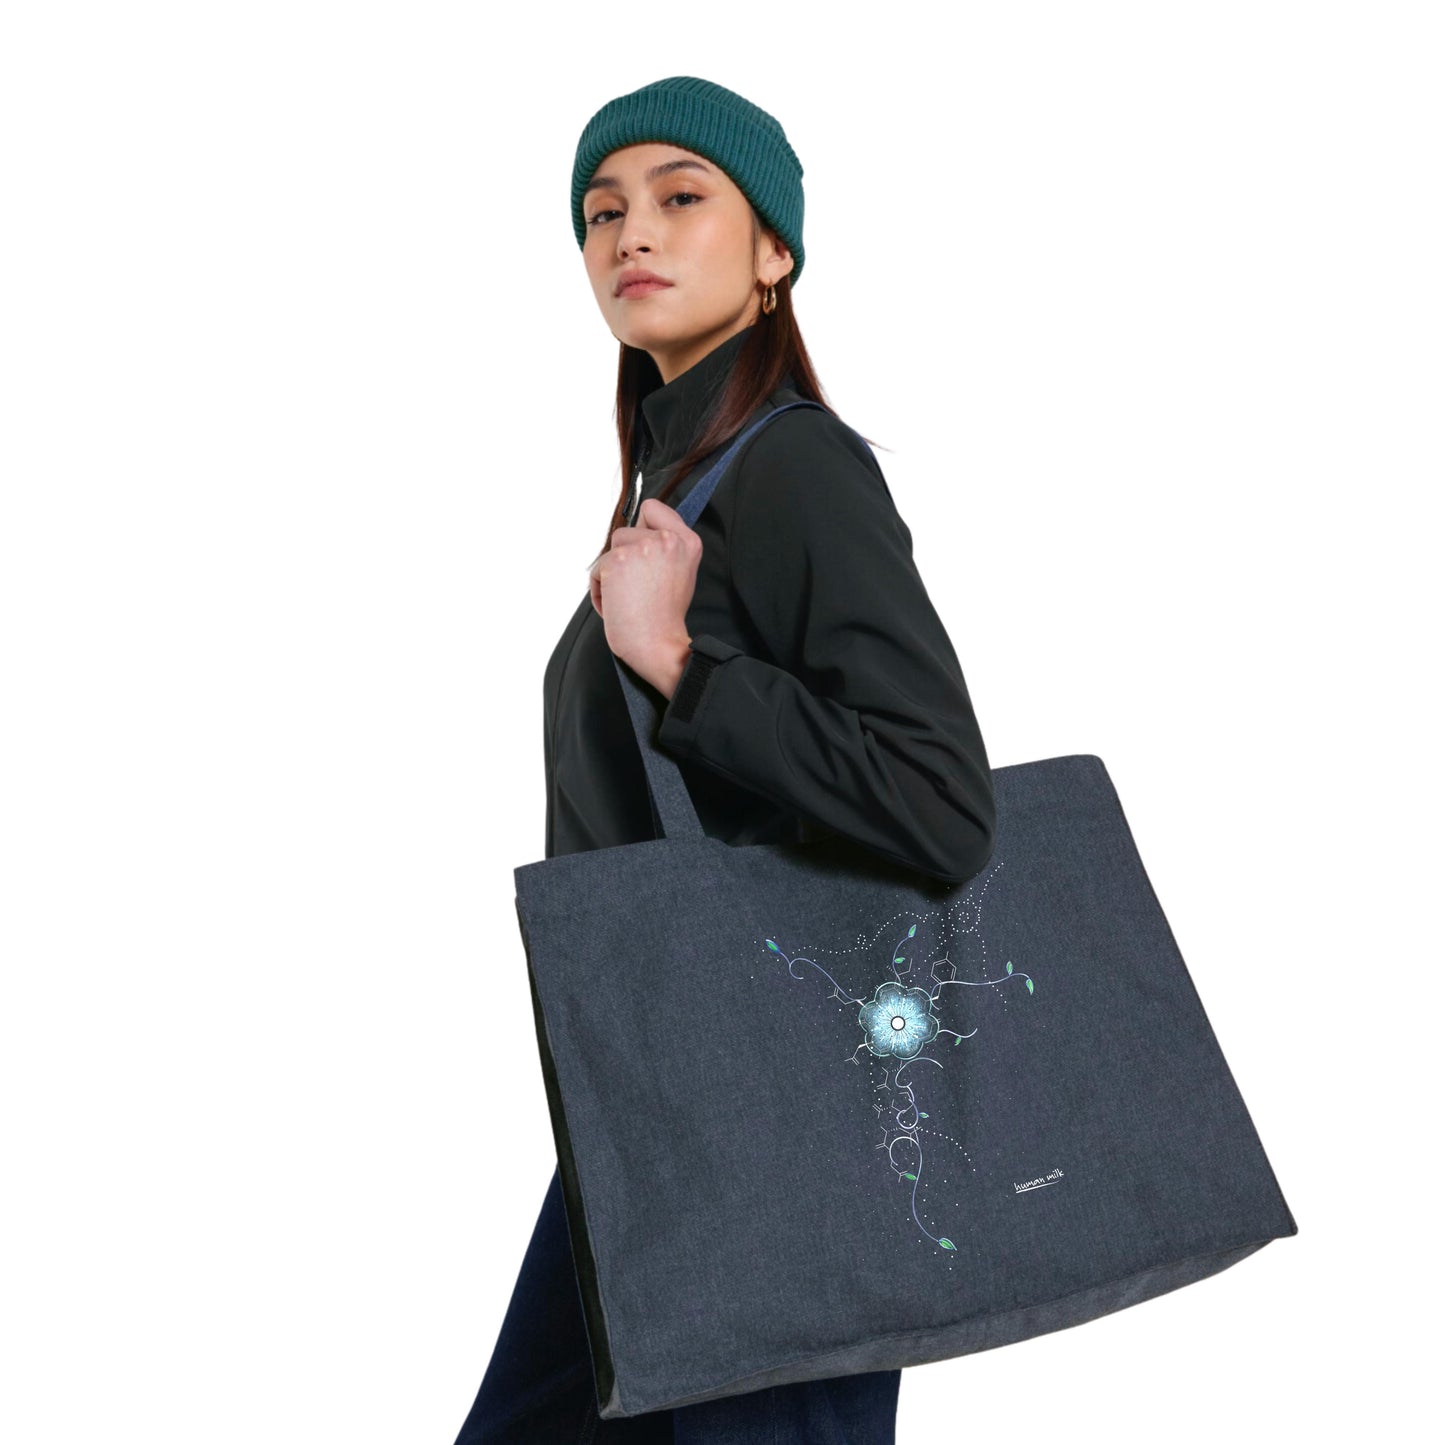 Oxyflower Shopping Bag. 2 colour options